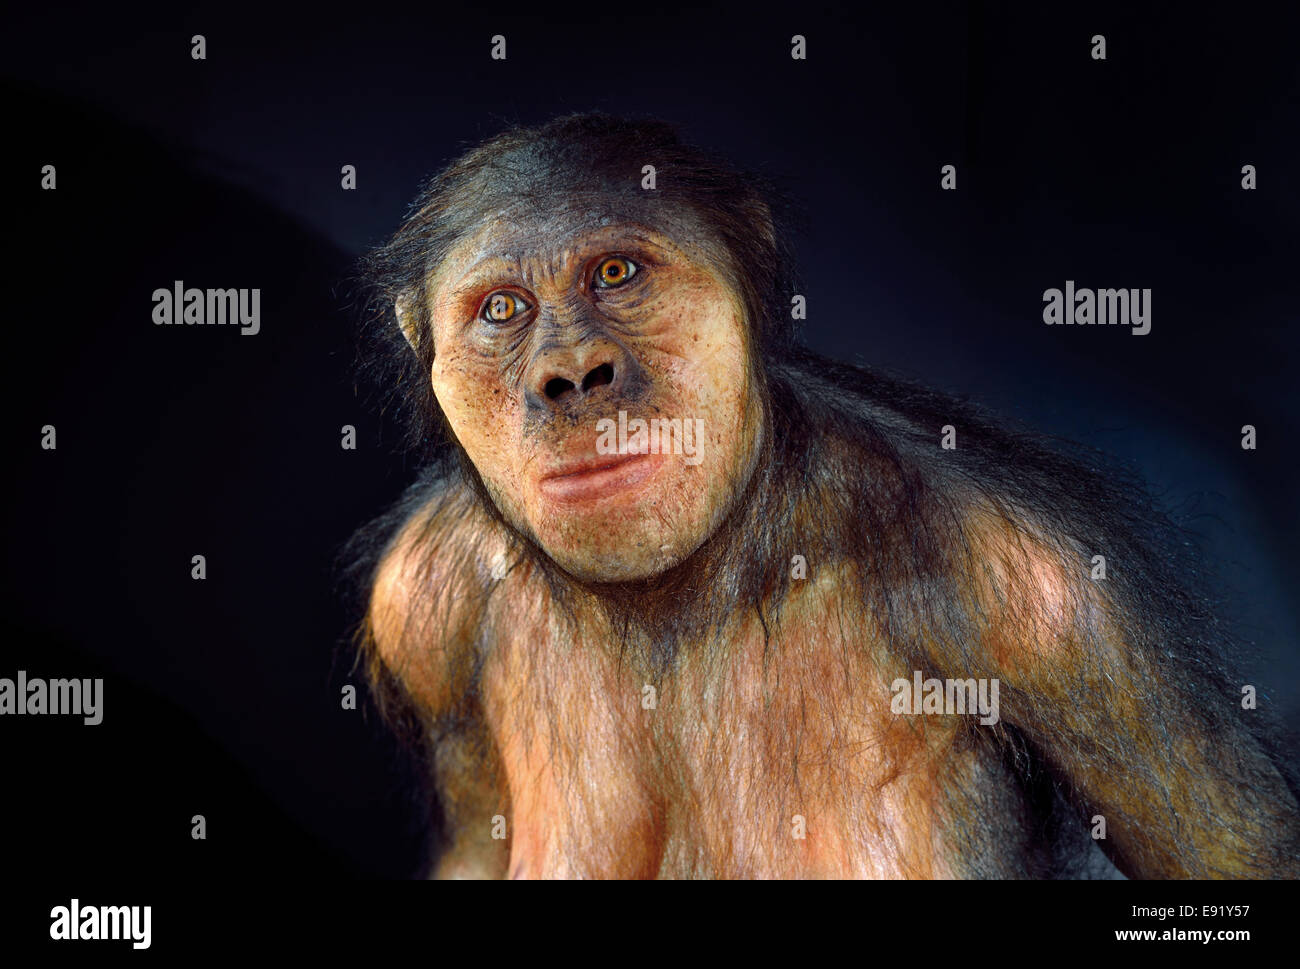 España, Burgos: Retrato de un homínido Australopithecus Africanus en el Museo de la Evolución Humana en Burgos Foto de stock